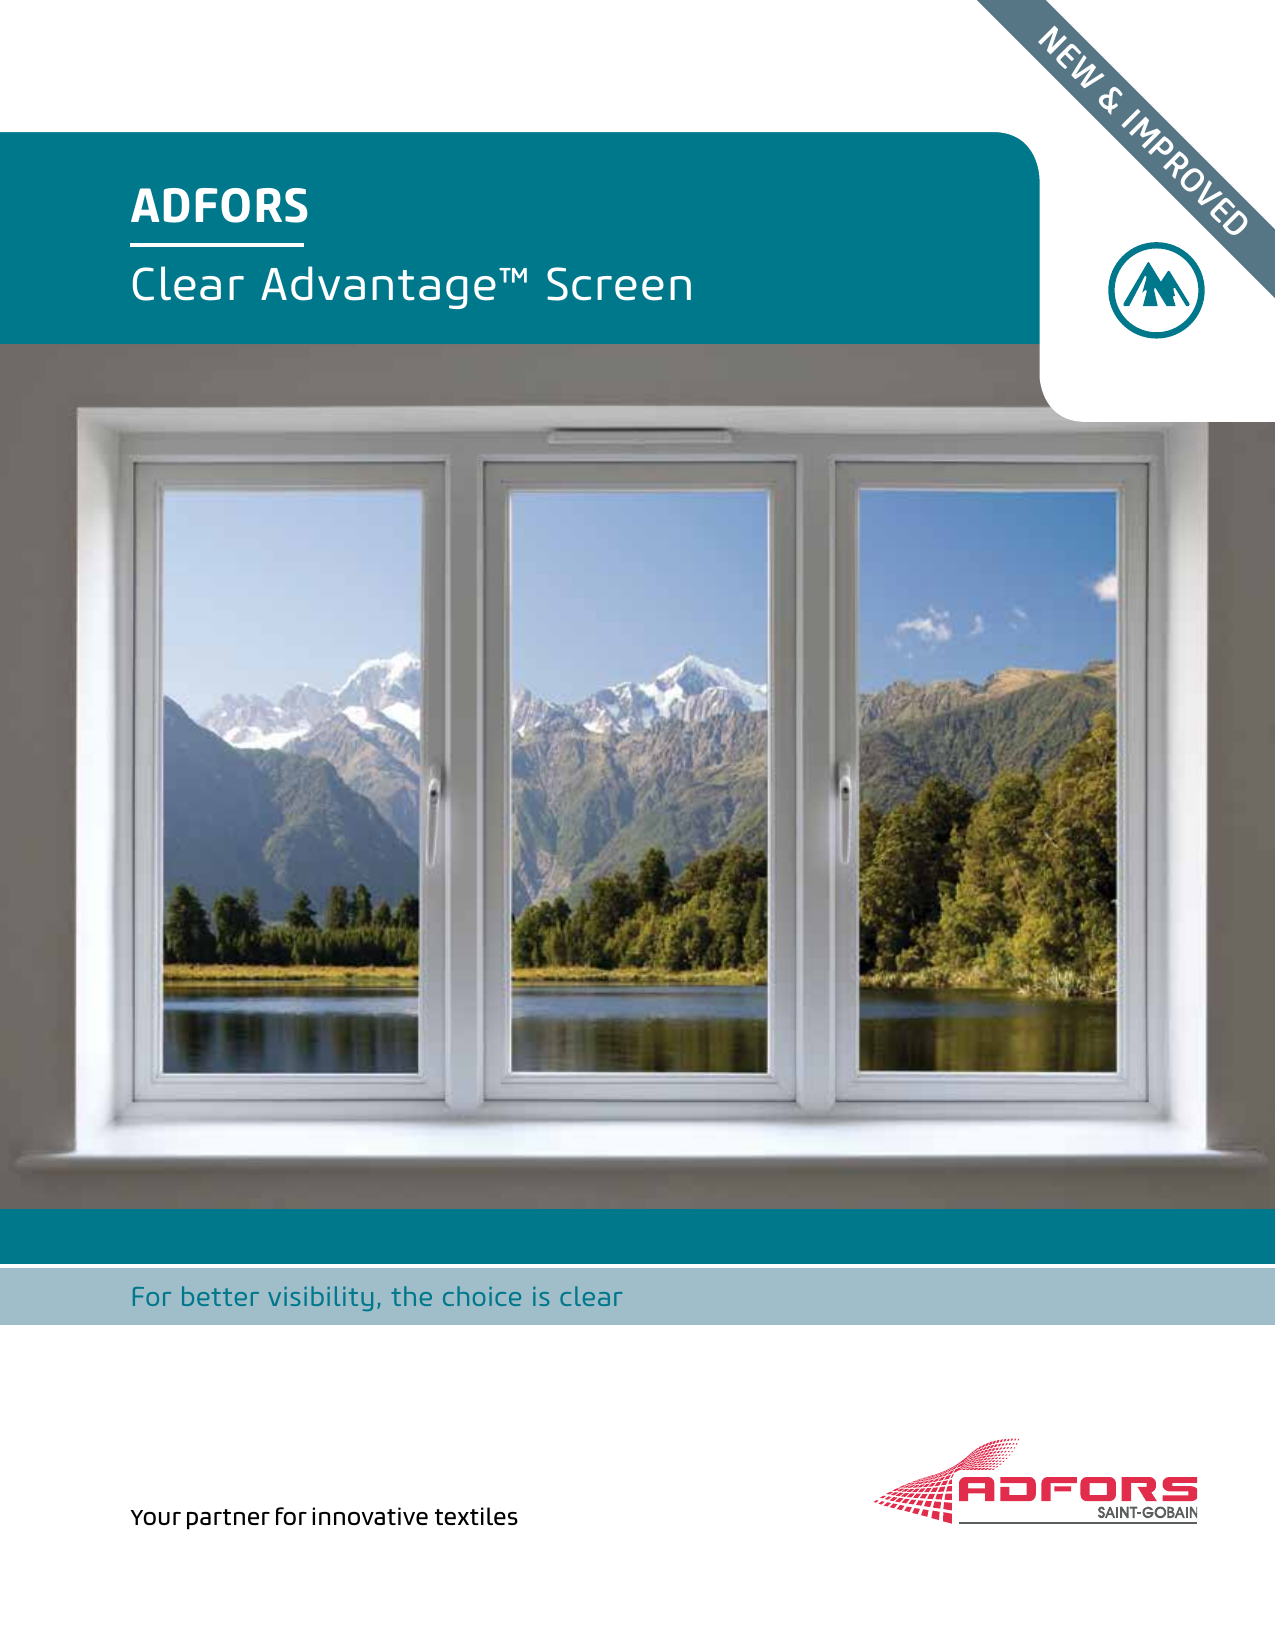 Saint-Gobain ADFORS FCS10183-M Clear Advantage 36 in. x 84 in. Charcoal  Fiberglass Screen Repair Kit Product Brochure | Manualzz